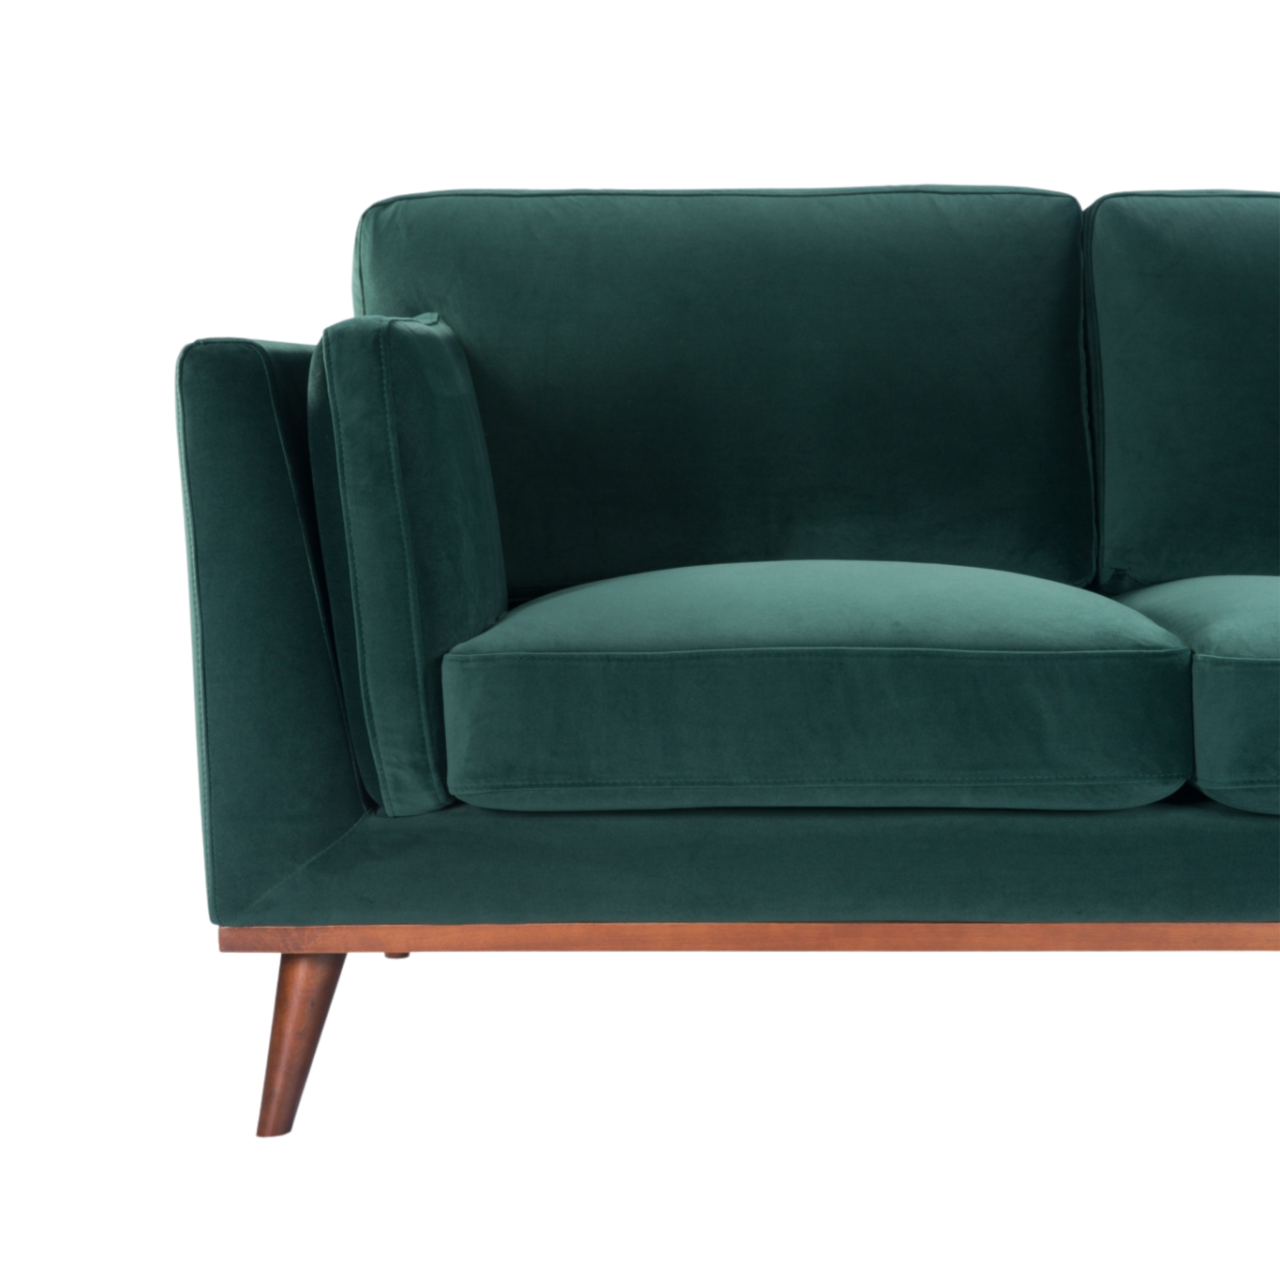 detail of detail of Simple, modern shaped 2 seater sofa in emerald green velvet upholstery